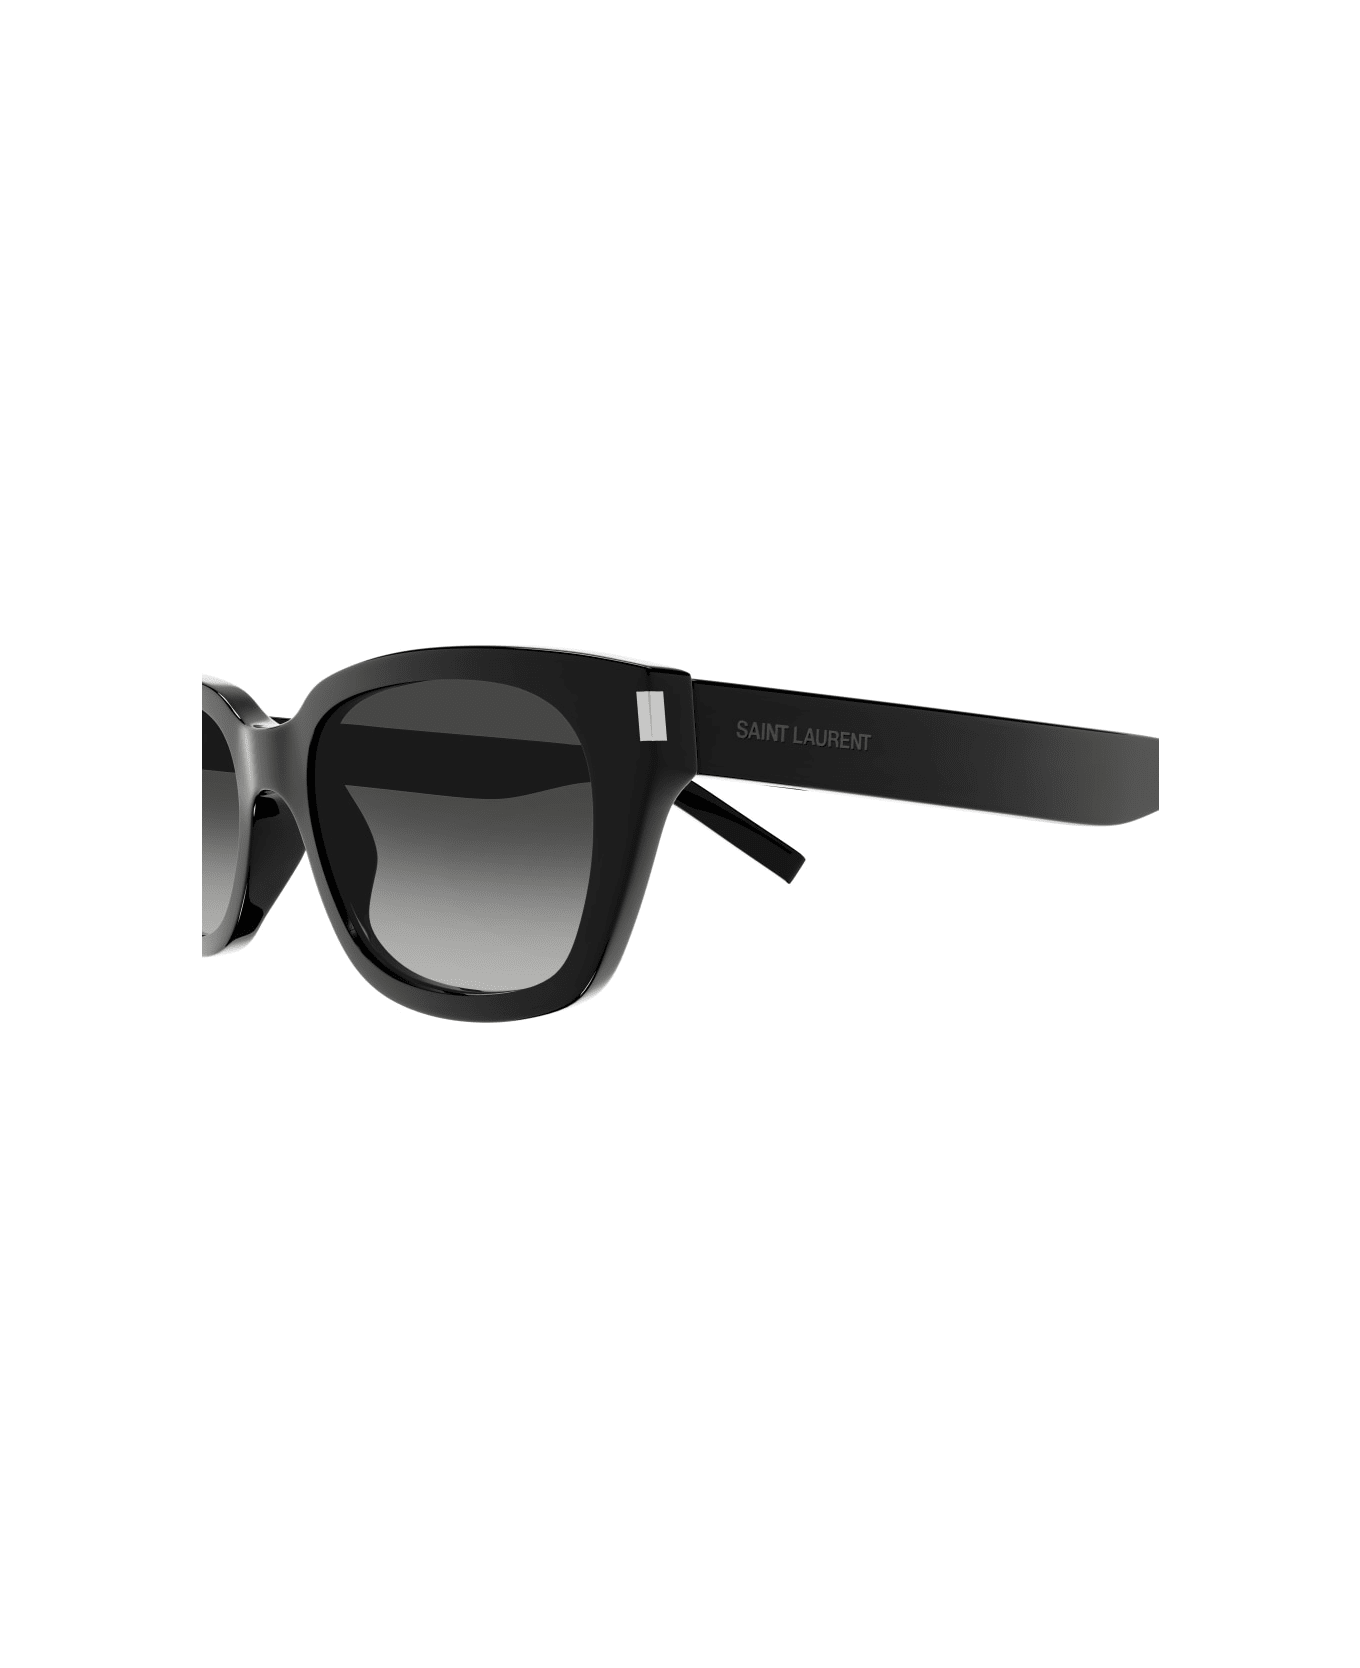 Saint Laurent Eyewear 1blf4br0a - 001 black black grey